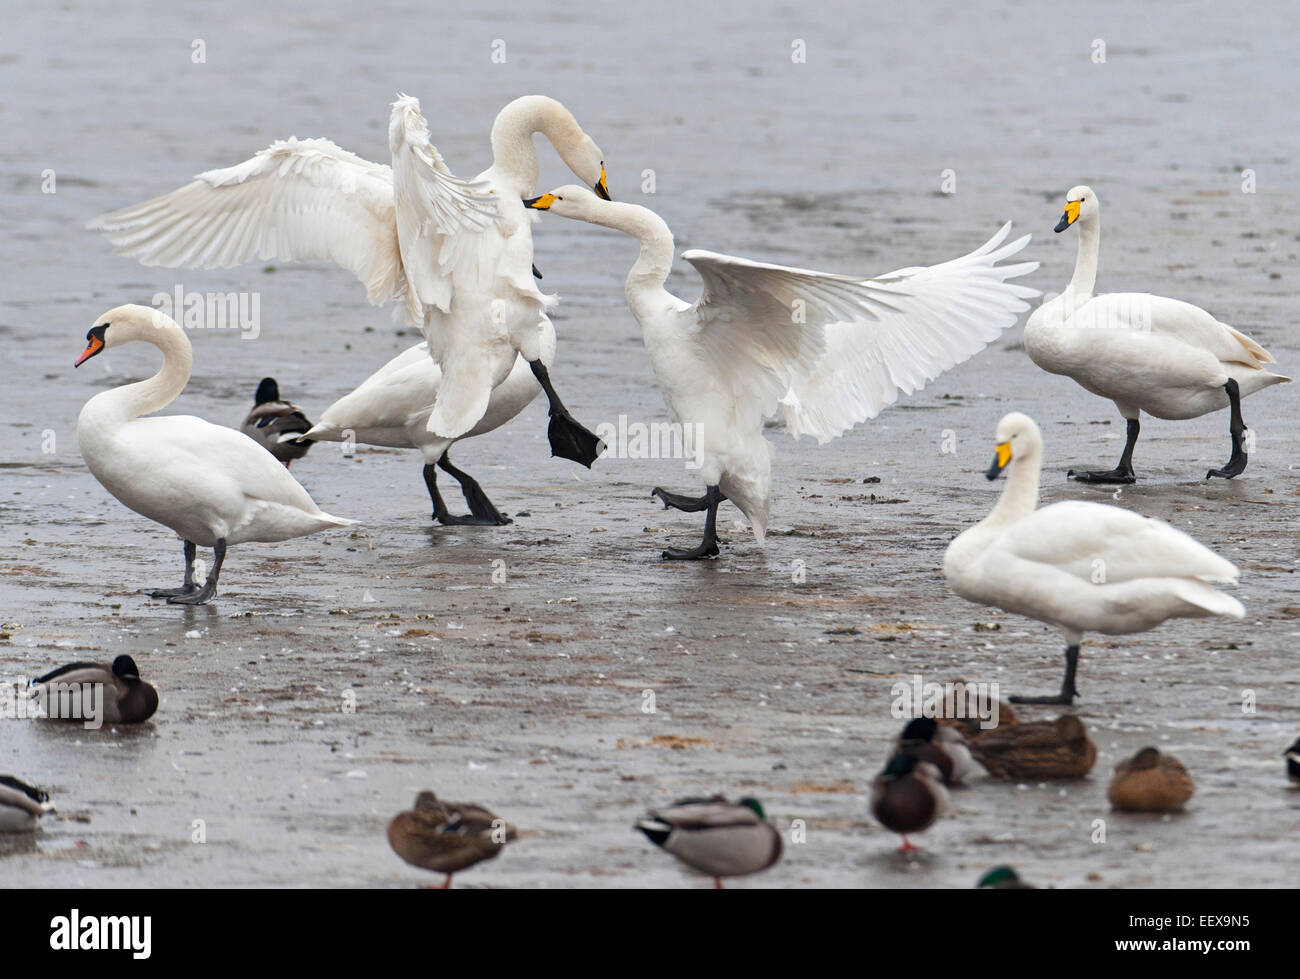 Whooper swans Cygnus cygnus on ice showing aggressive behavior. Stock Photo